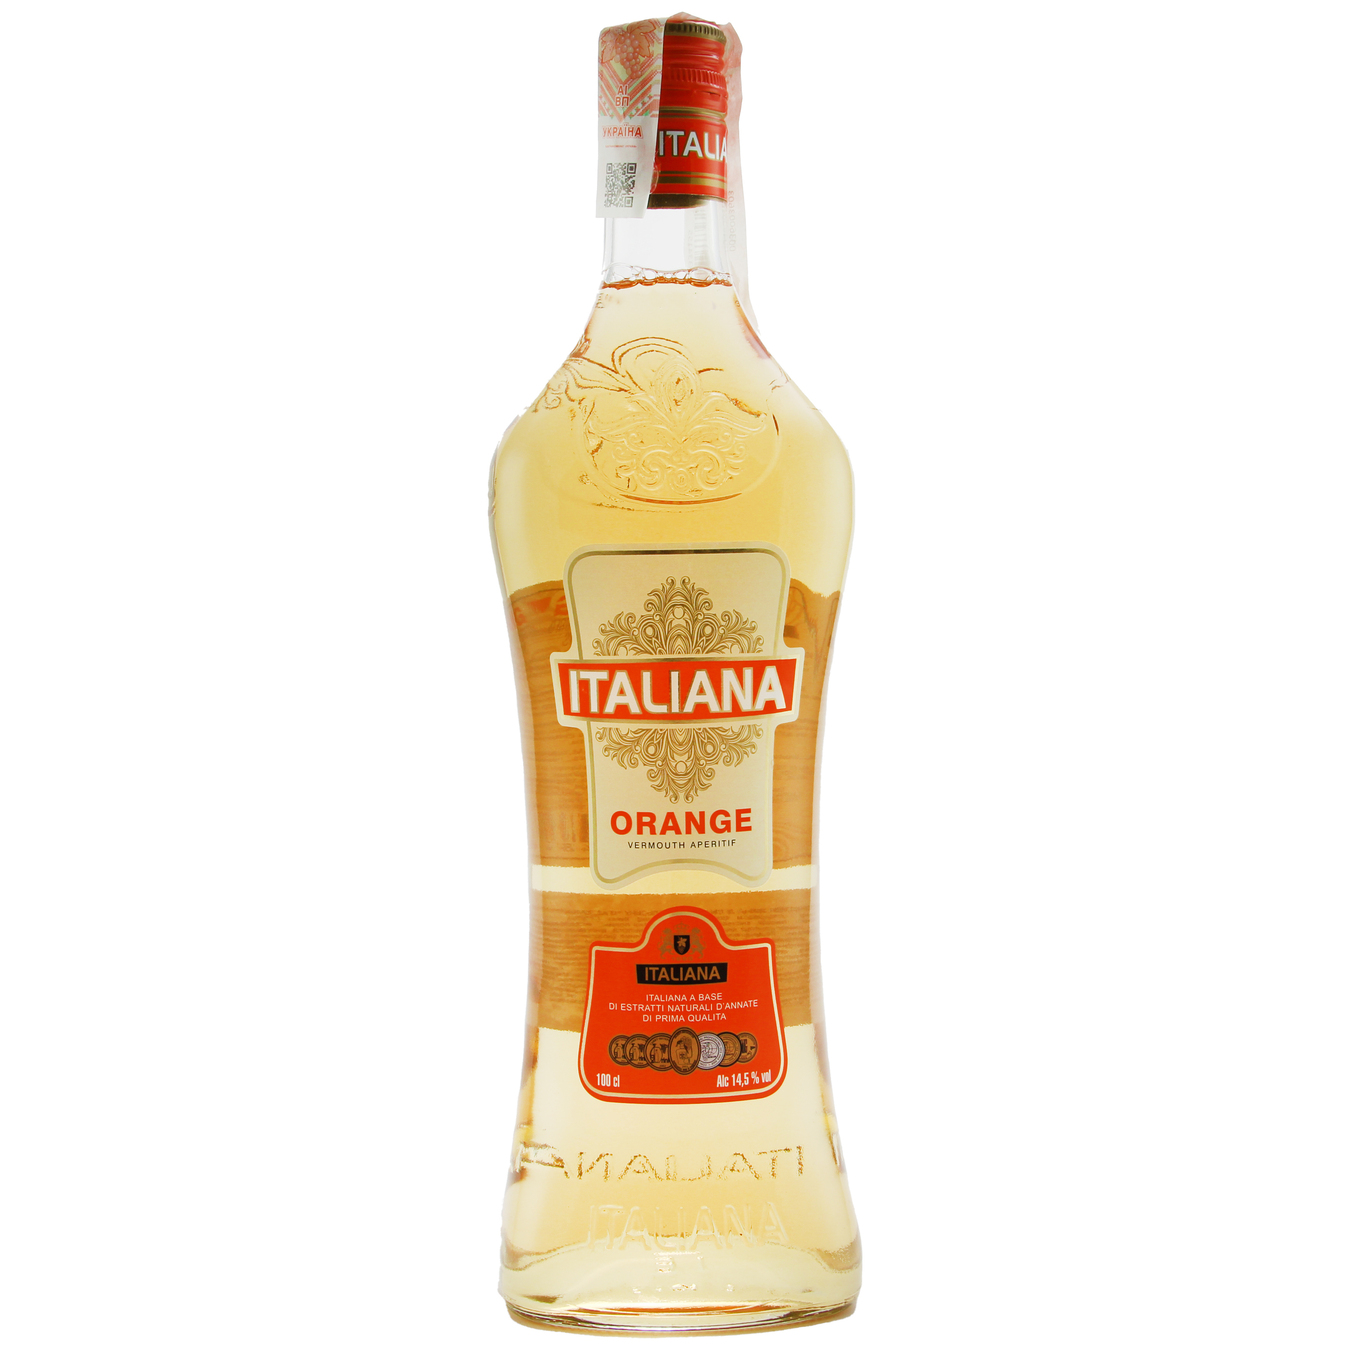 Italiana Orange Sweet Vermouth 14.5% 1l